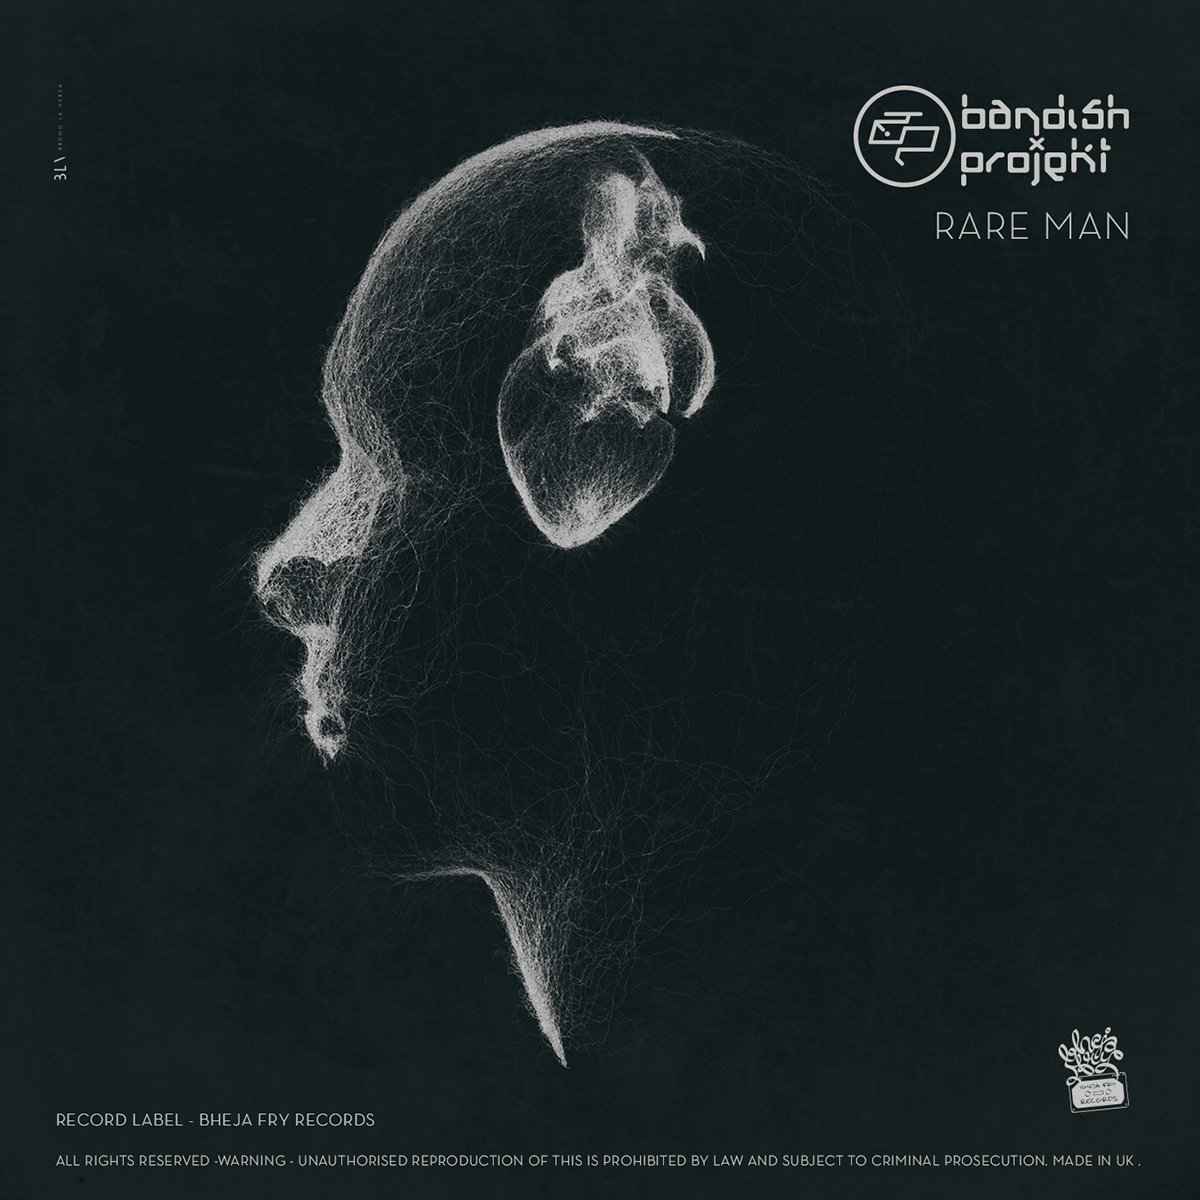 musica India bandish disco cd projekt Rare man Procedural free cover LP track Mtv